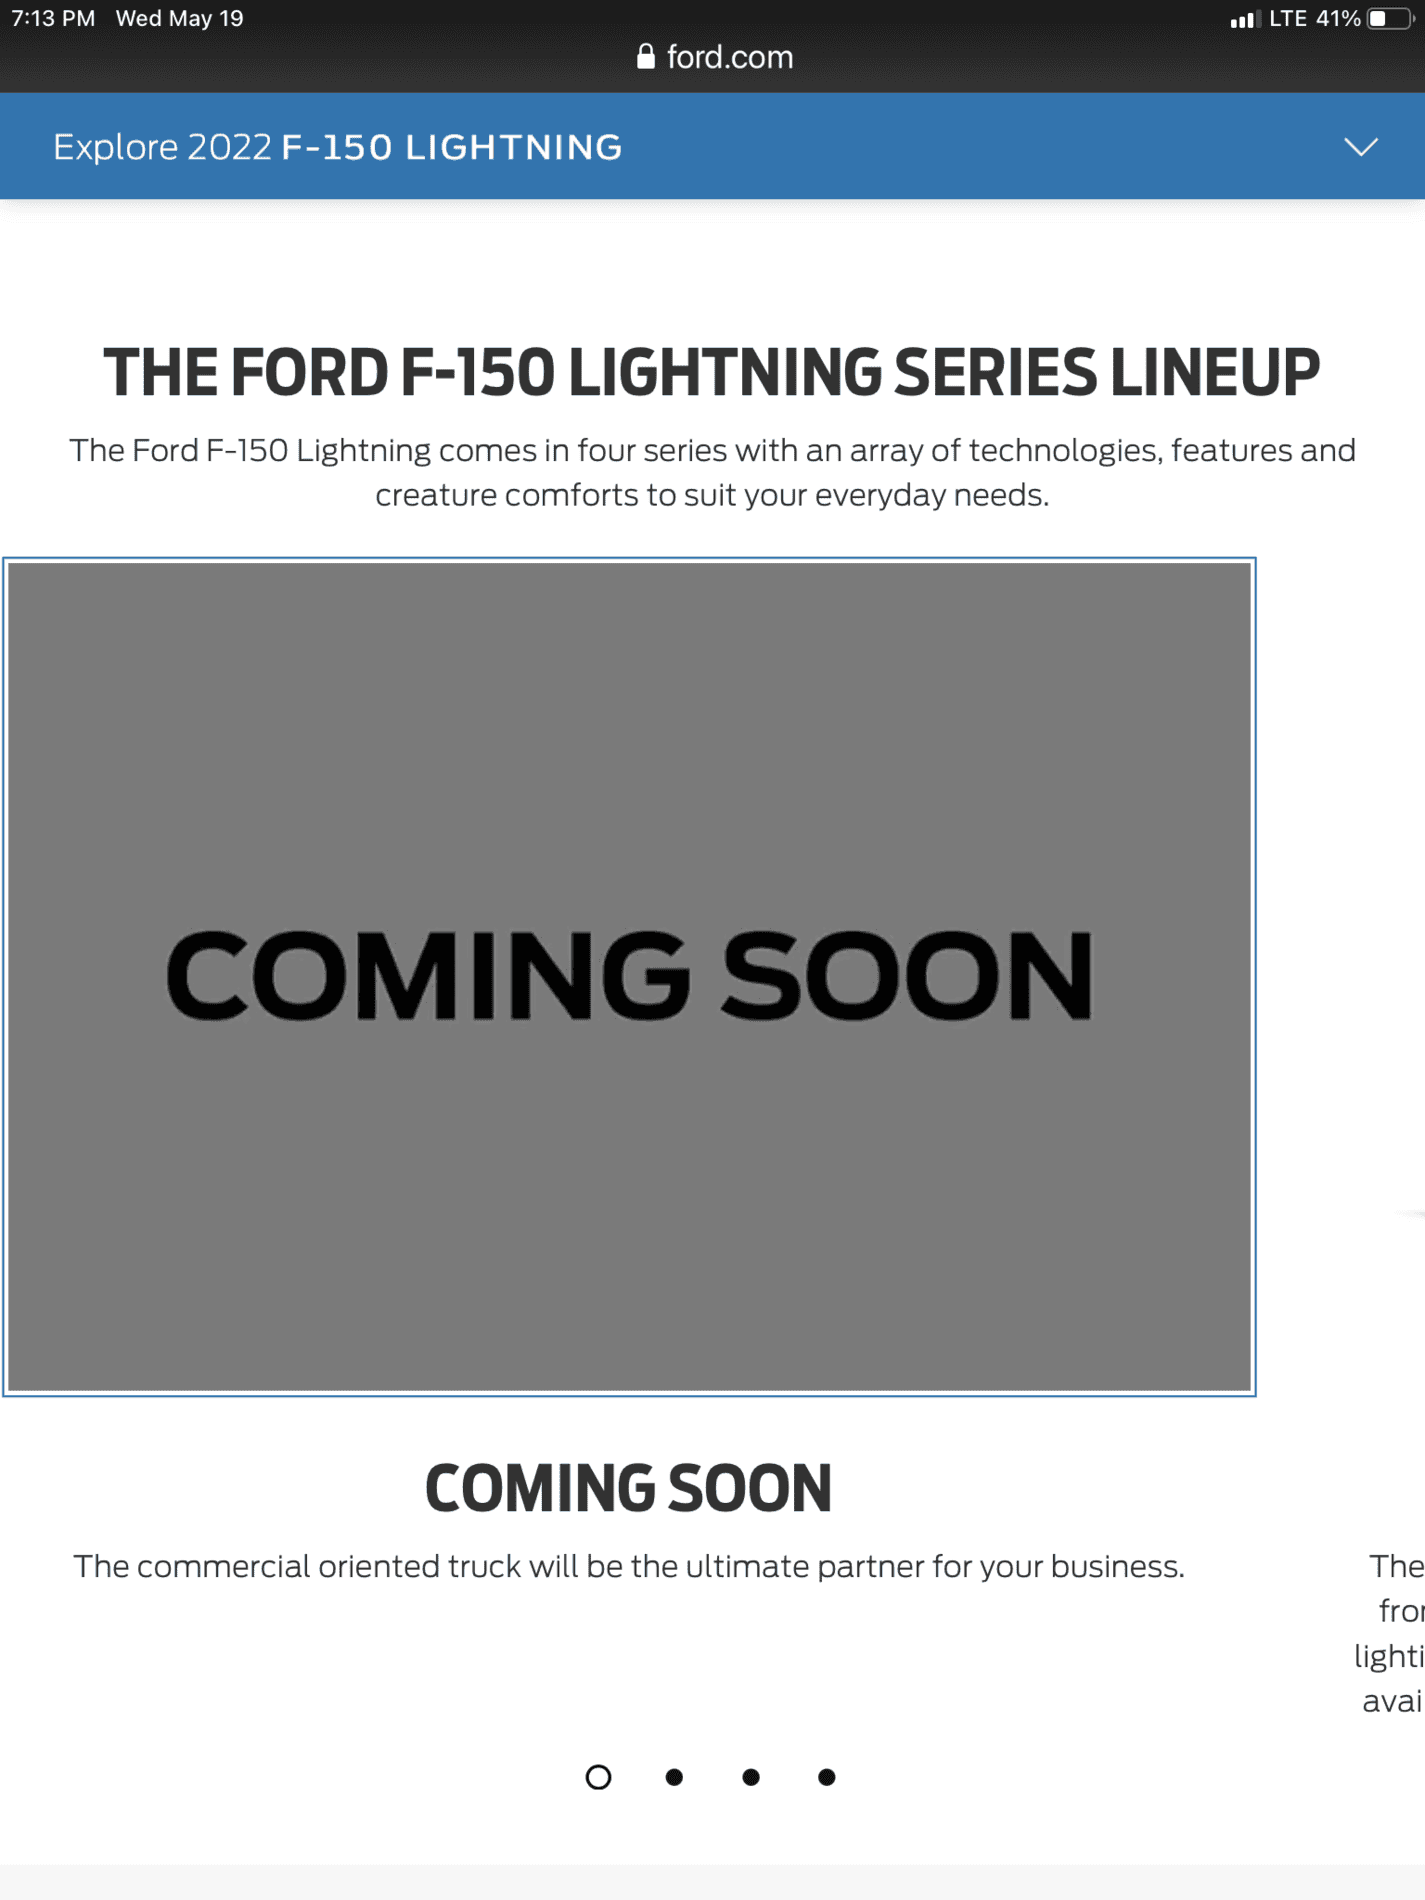 Ford F-150 Lightning Official 2022 F-150 Lightning Specs, Pricing, Photos & Videos! B2C888AF-97D2-4733-B782-0F63ED76AA4C